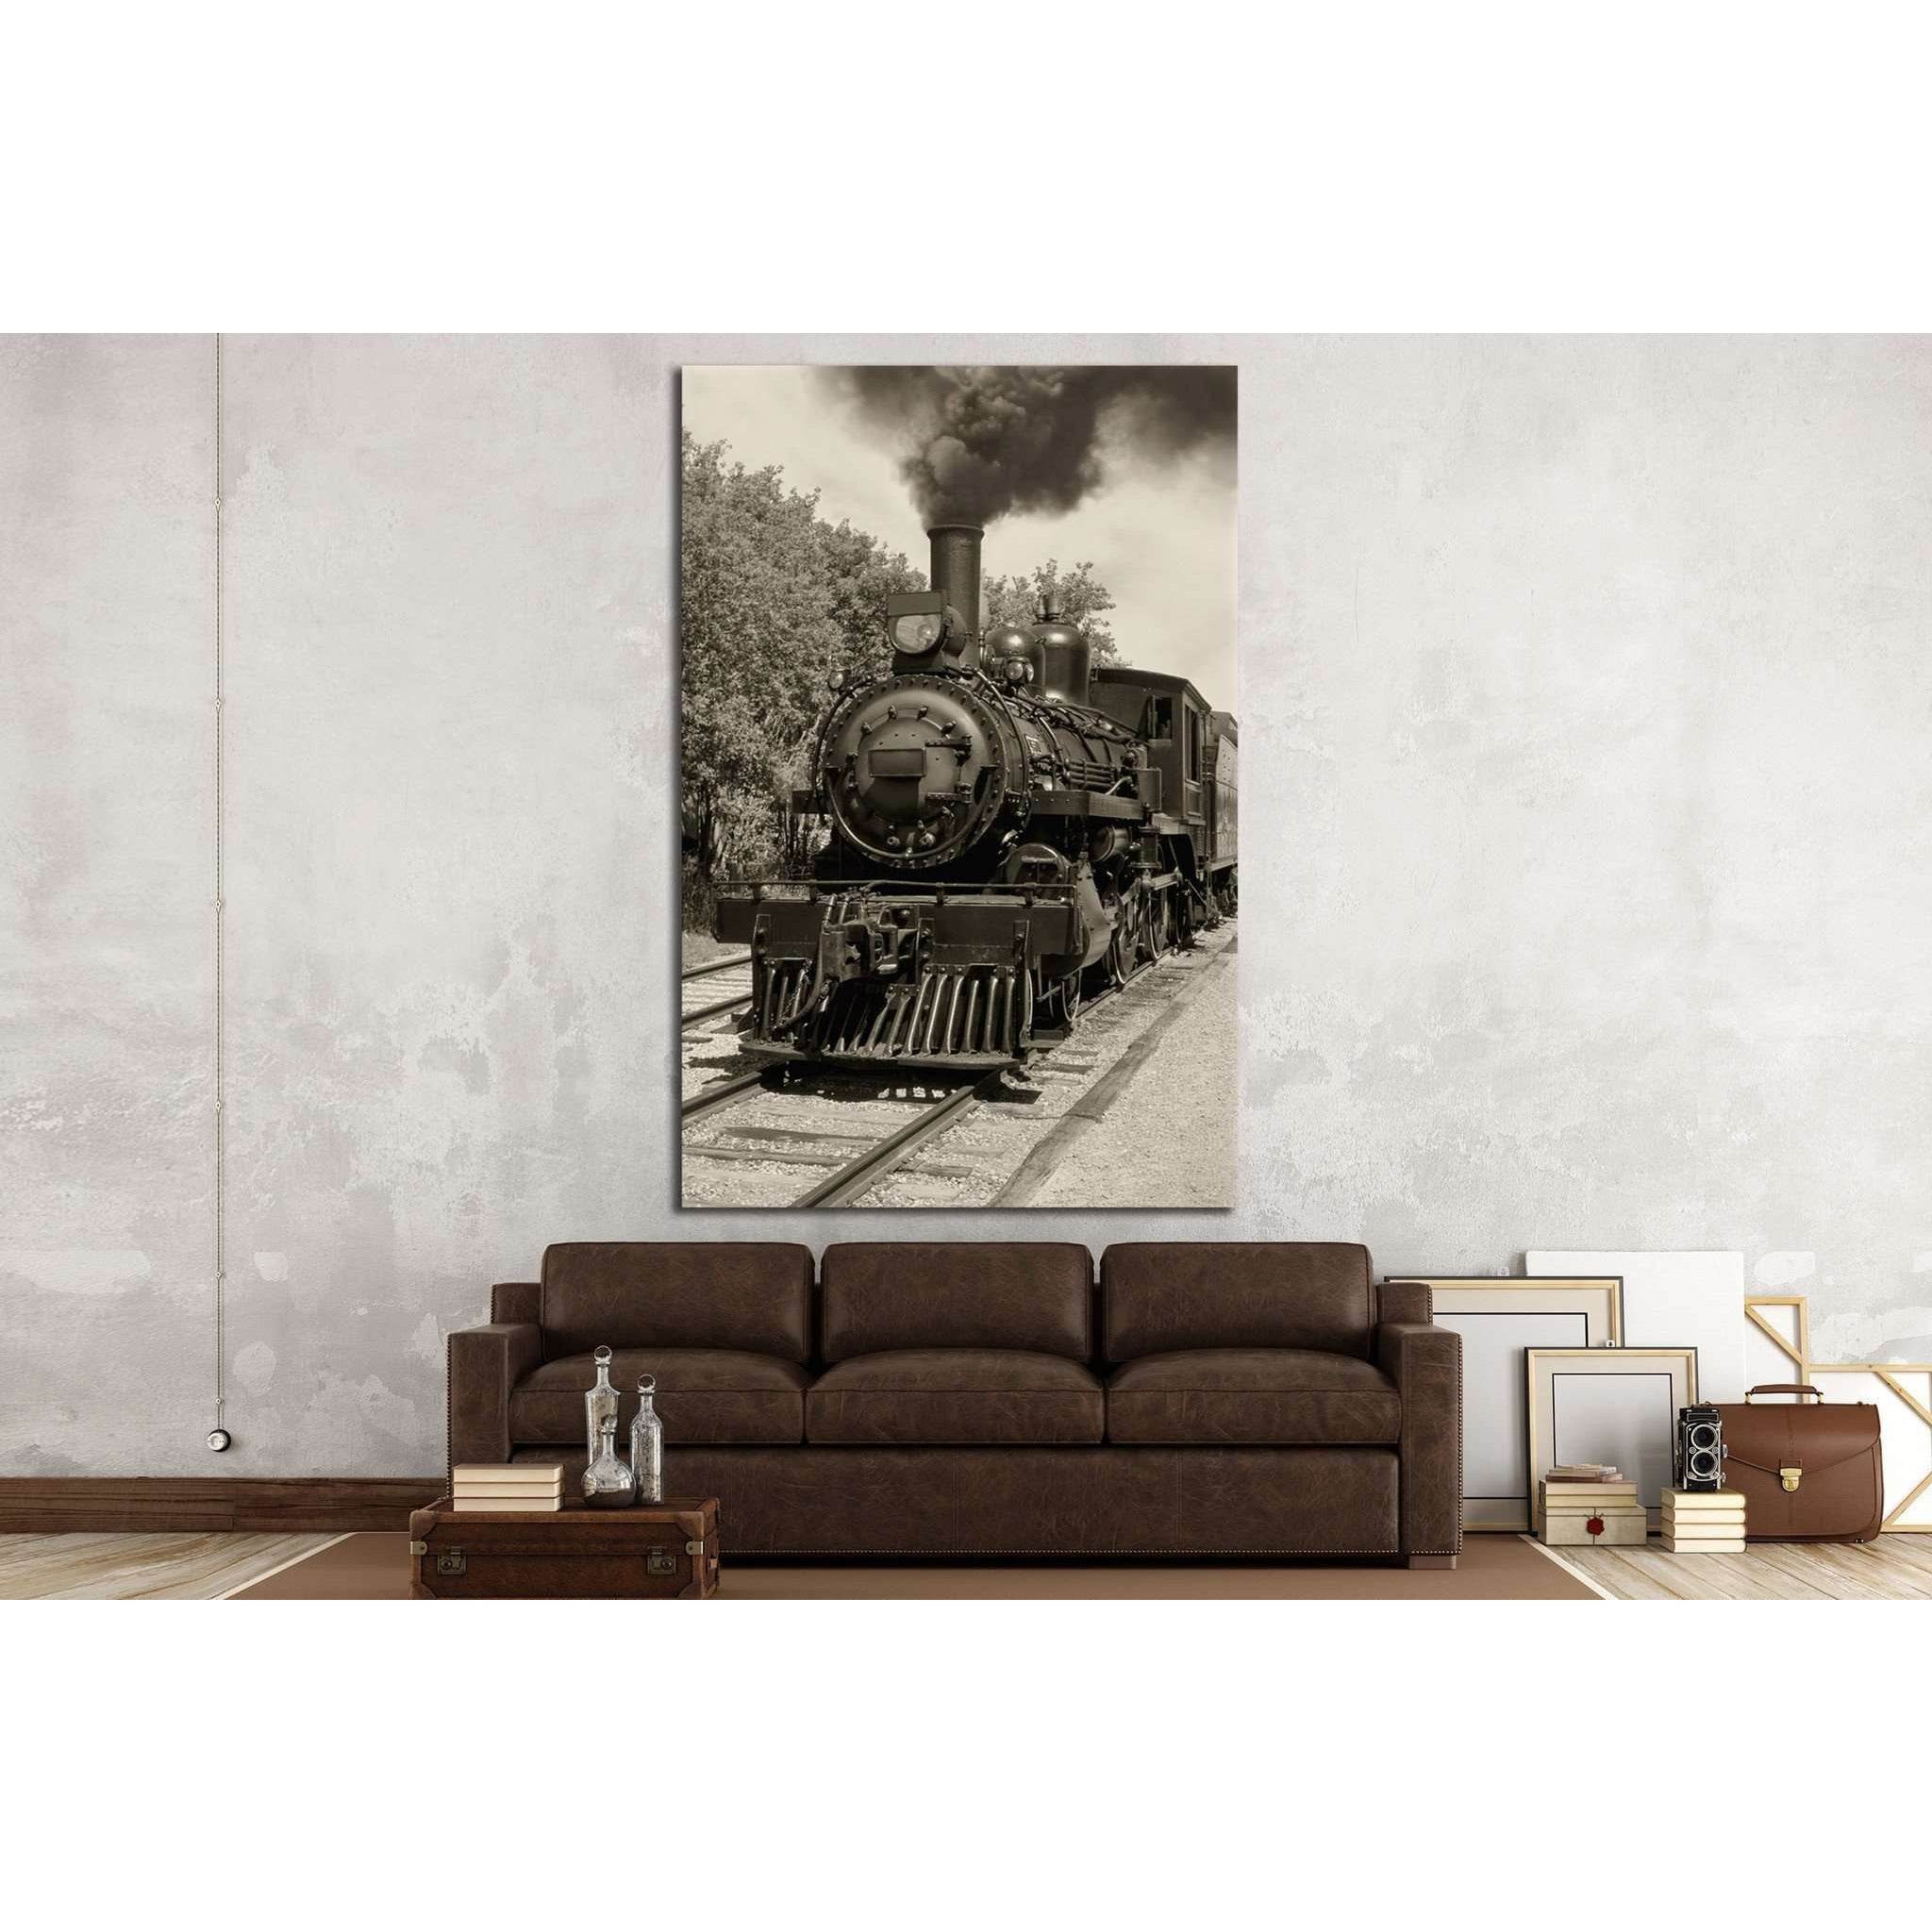 Locomotive Wall Art №235 Ready to Hang Canvas Print